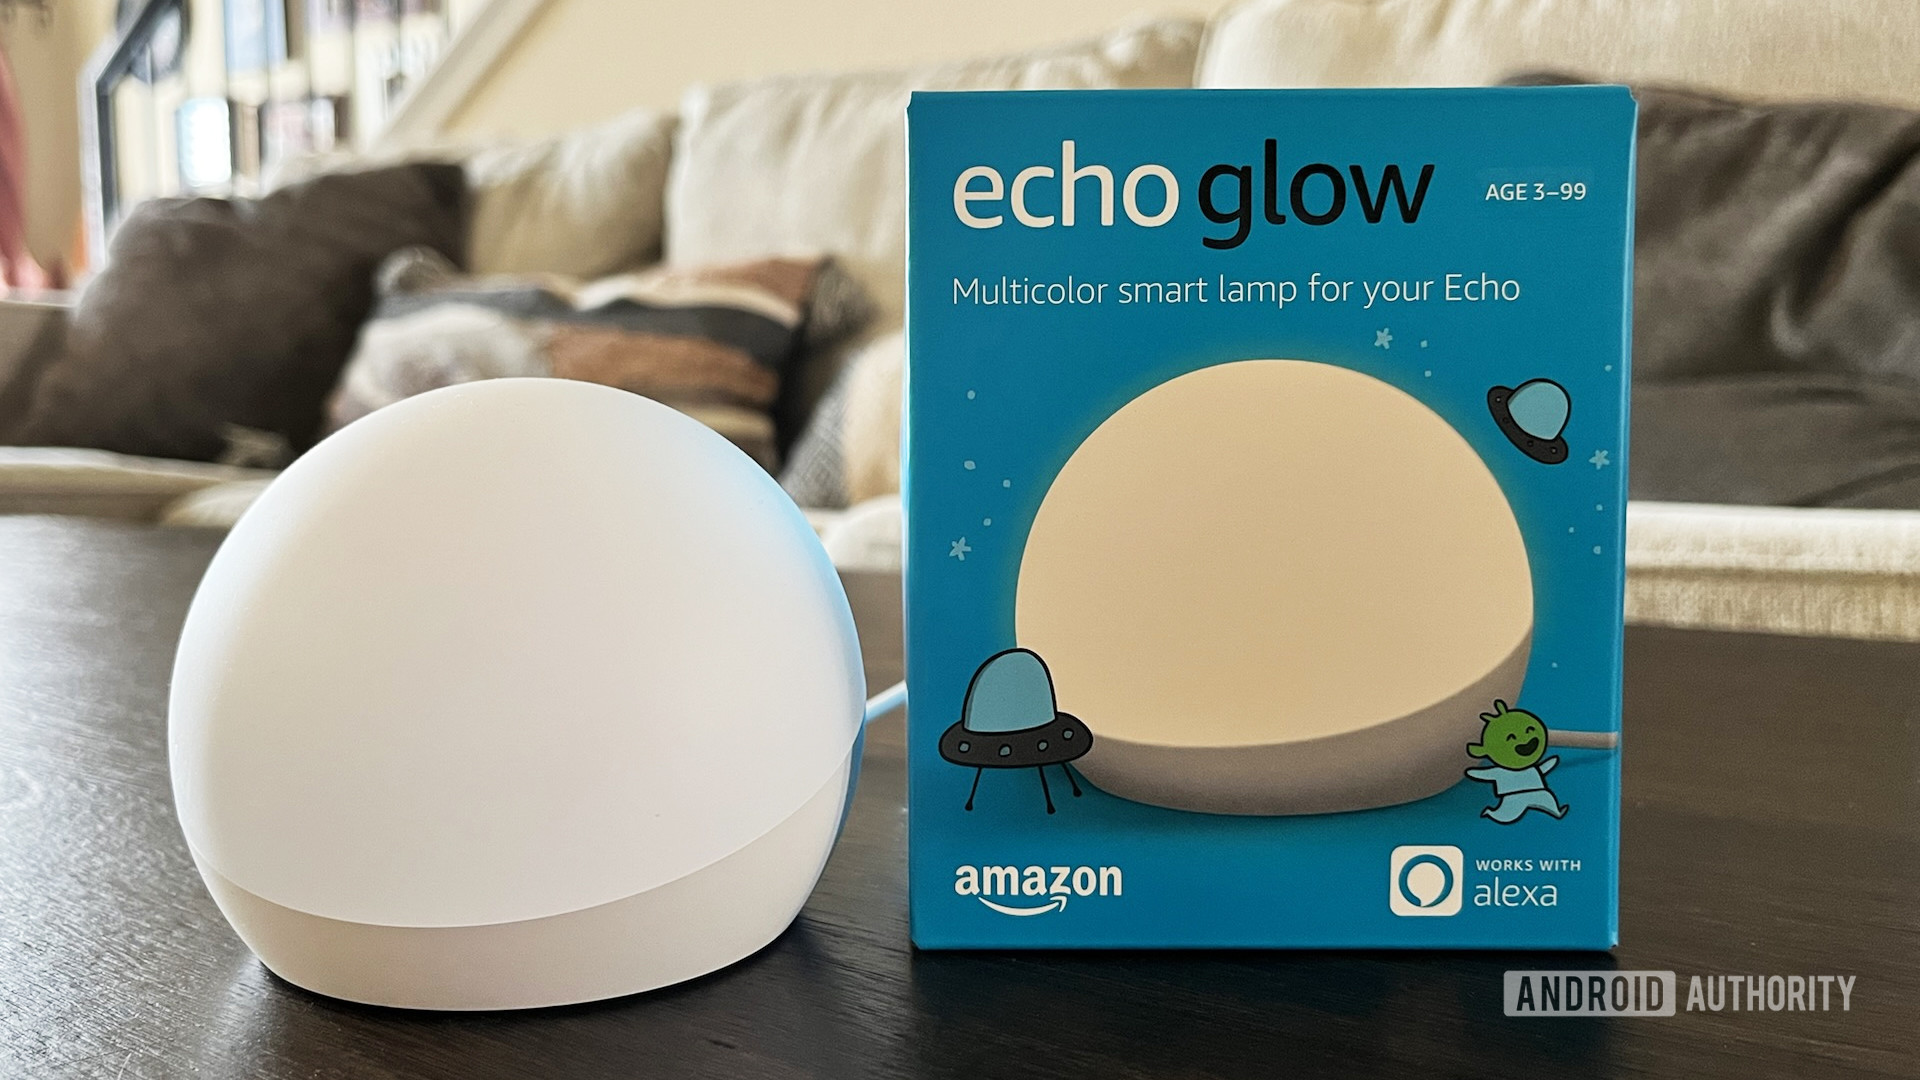 The Amazon Echo Glow and its box.